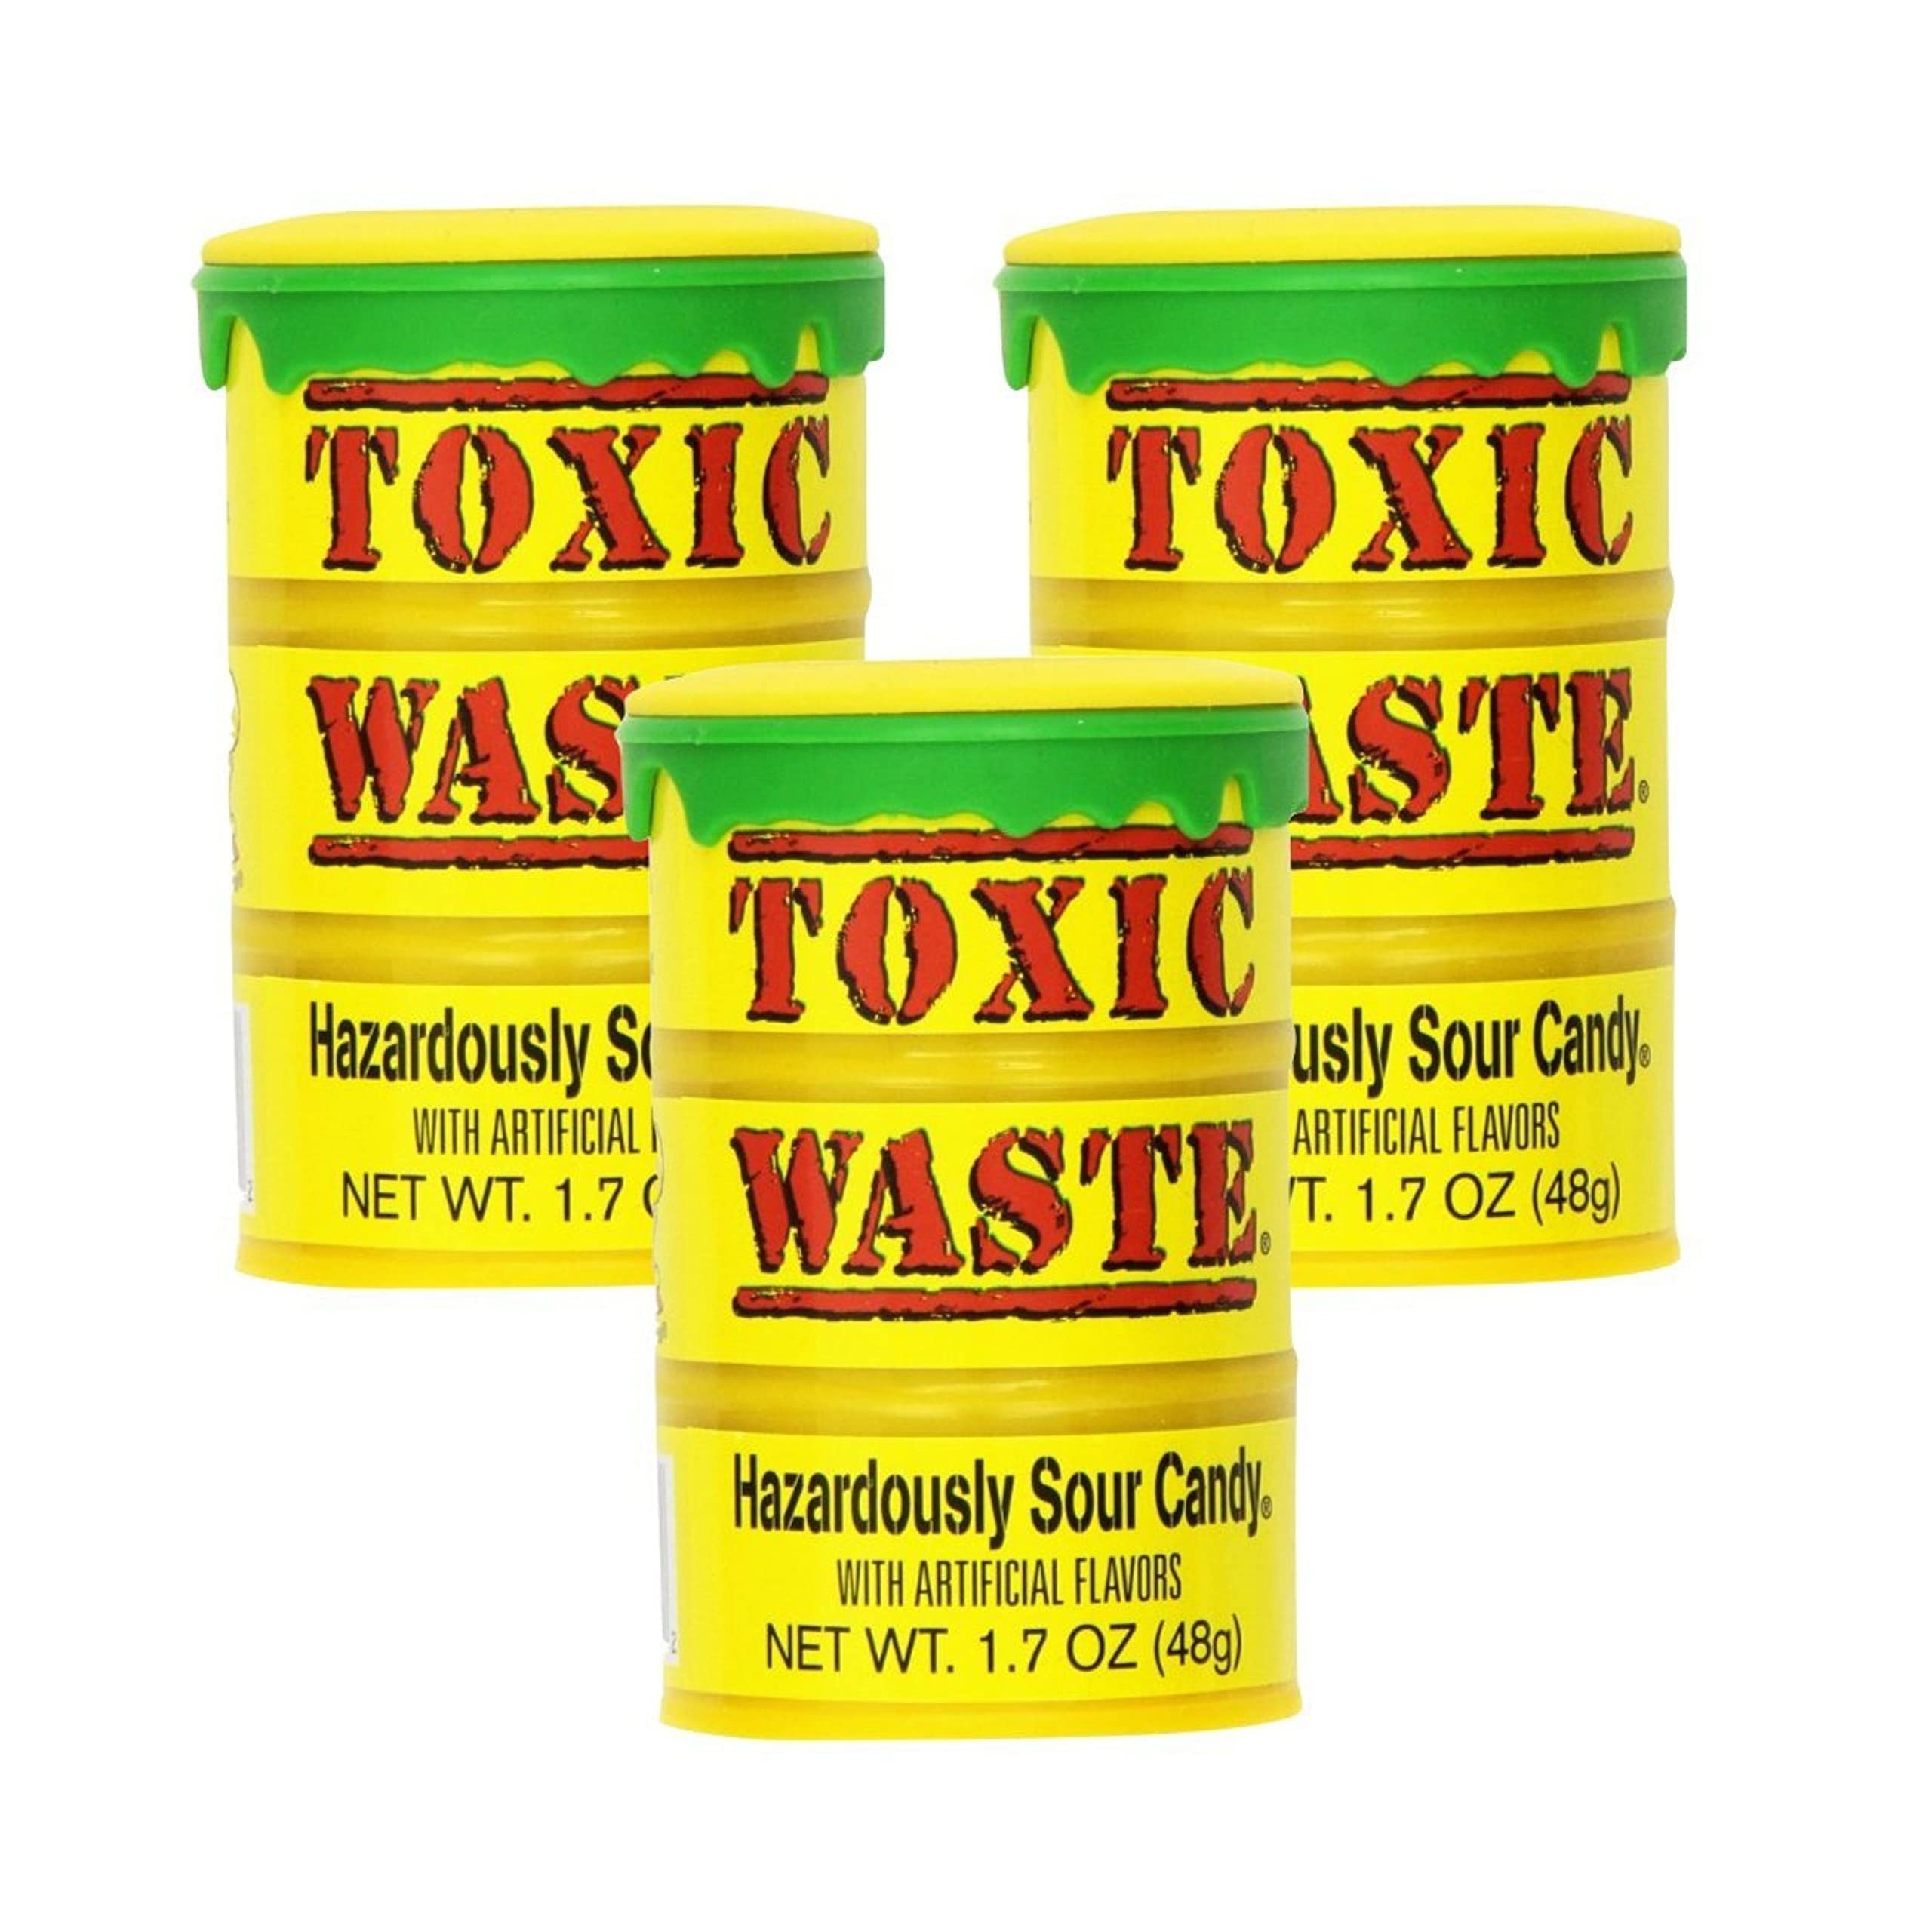 Токсик 5. Toxic waste hazardously. Toxic waste конфеты. Леденцы Toxic waste, 12 шт. Леденцы Toxic waste Yellow.